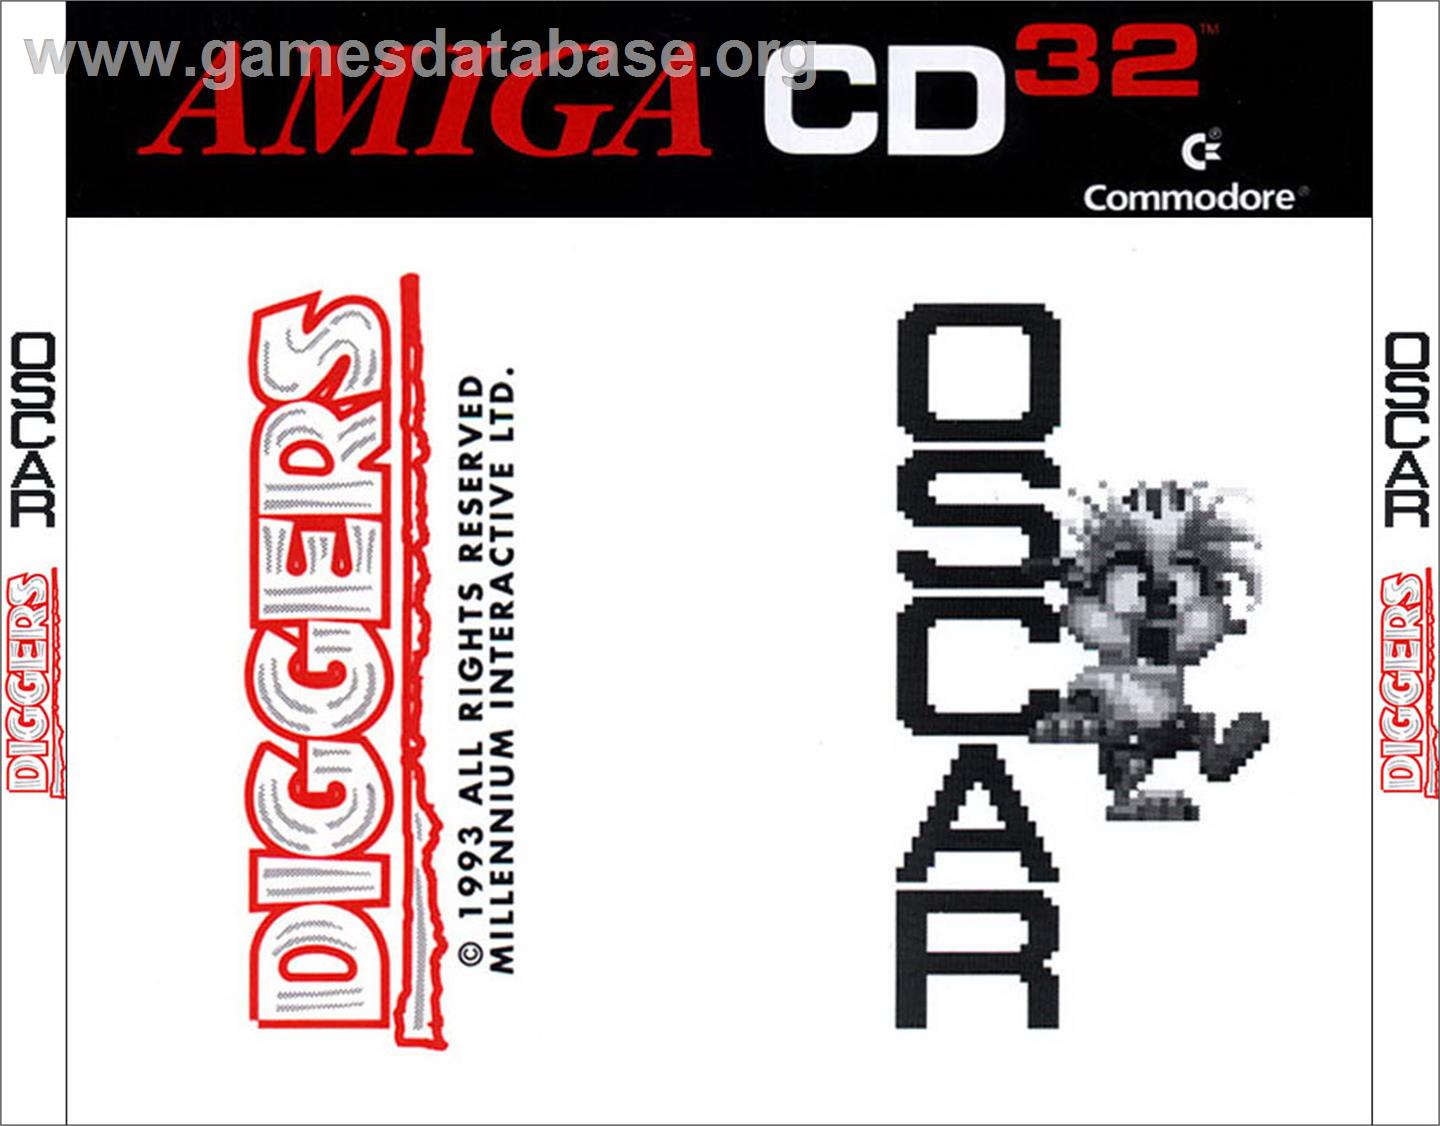 Diggers & Oscar - Commodore Amiga CD32 - Artwork - Box Back